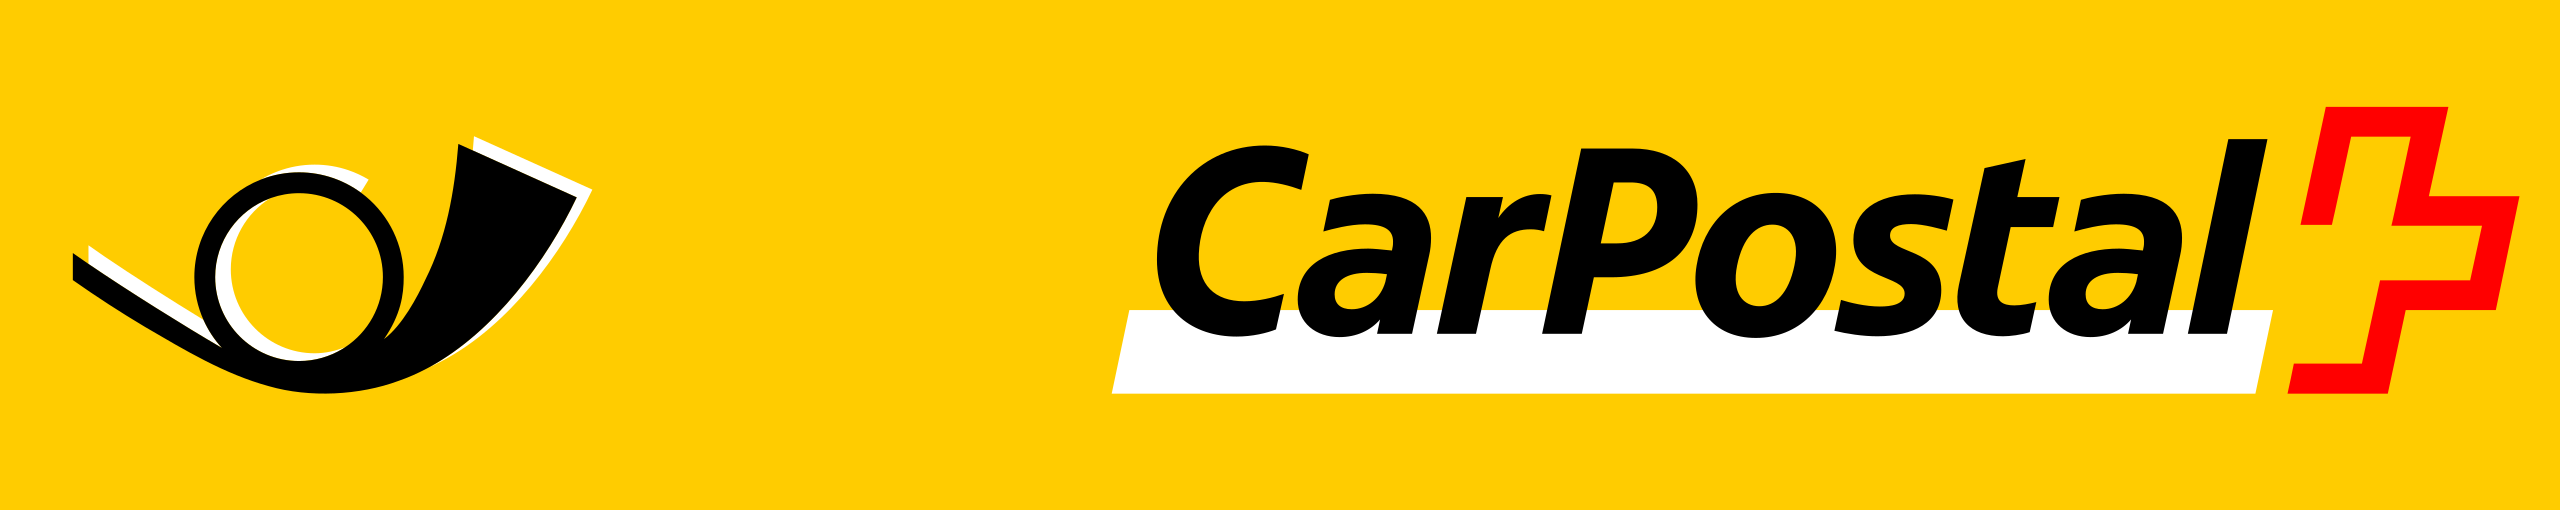 2560px-CarPostal_logo.svg